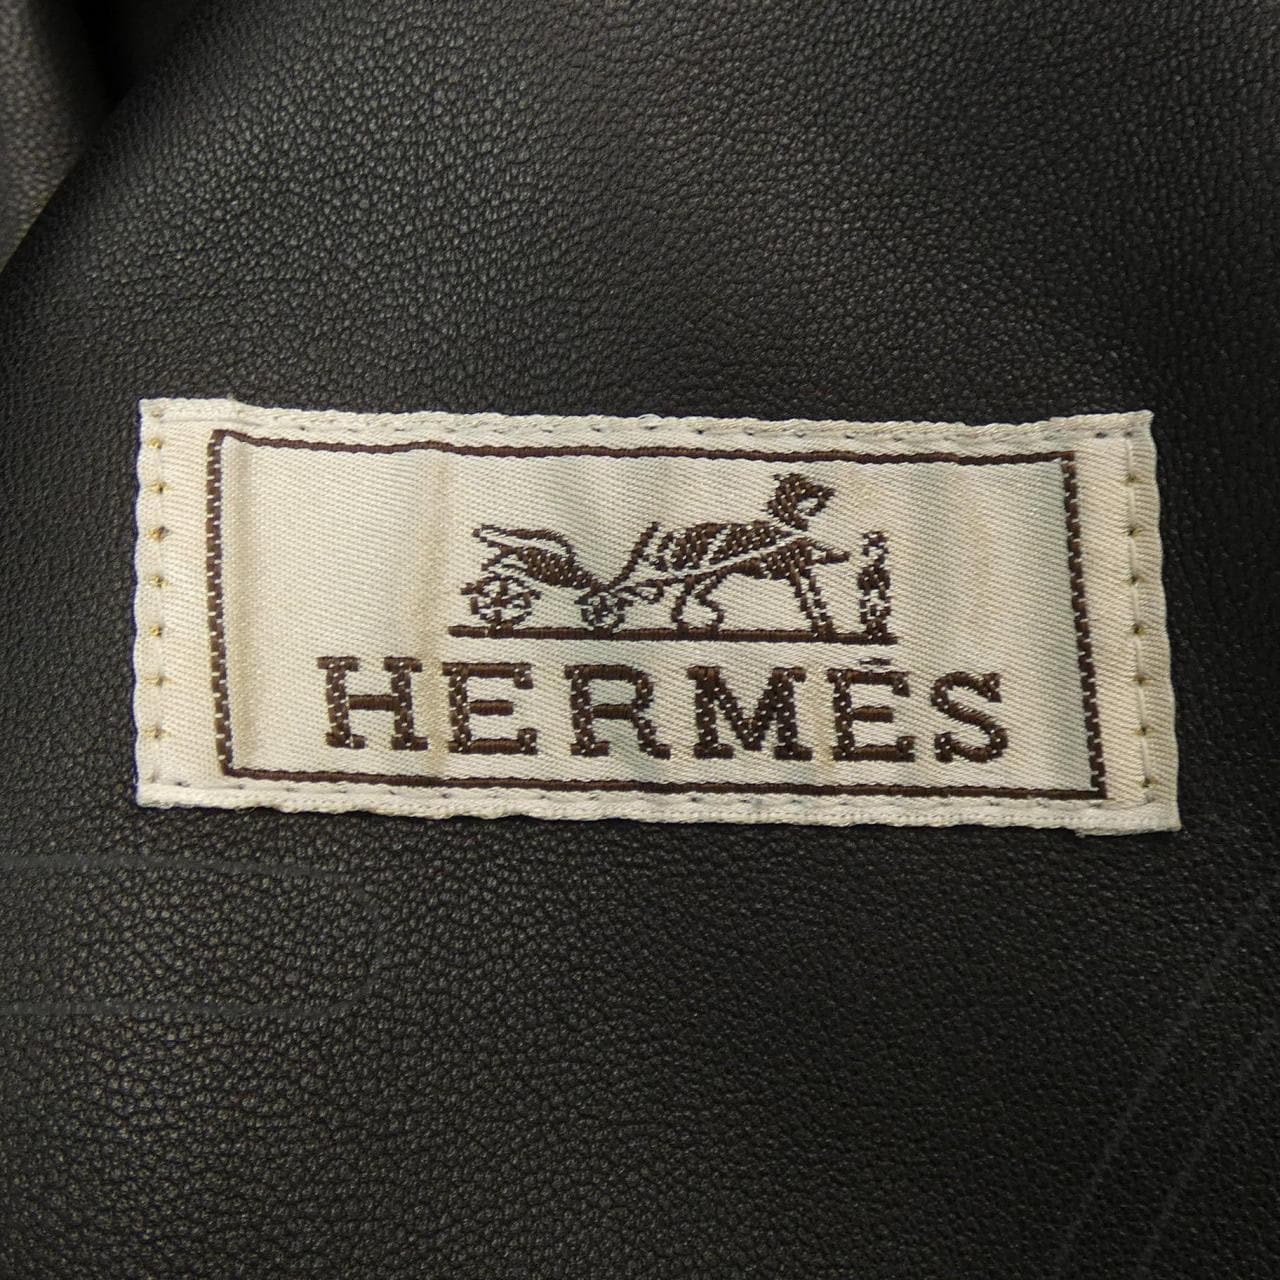 HERMES leather coat